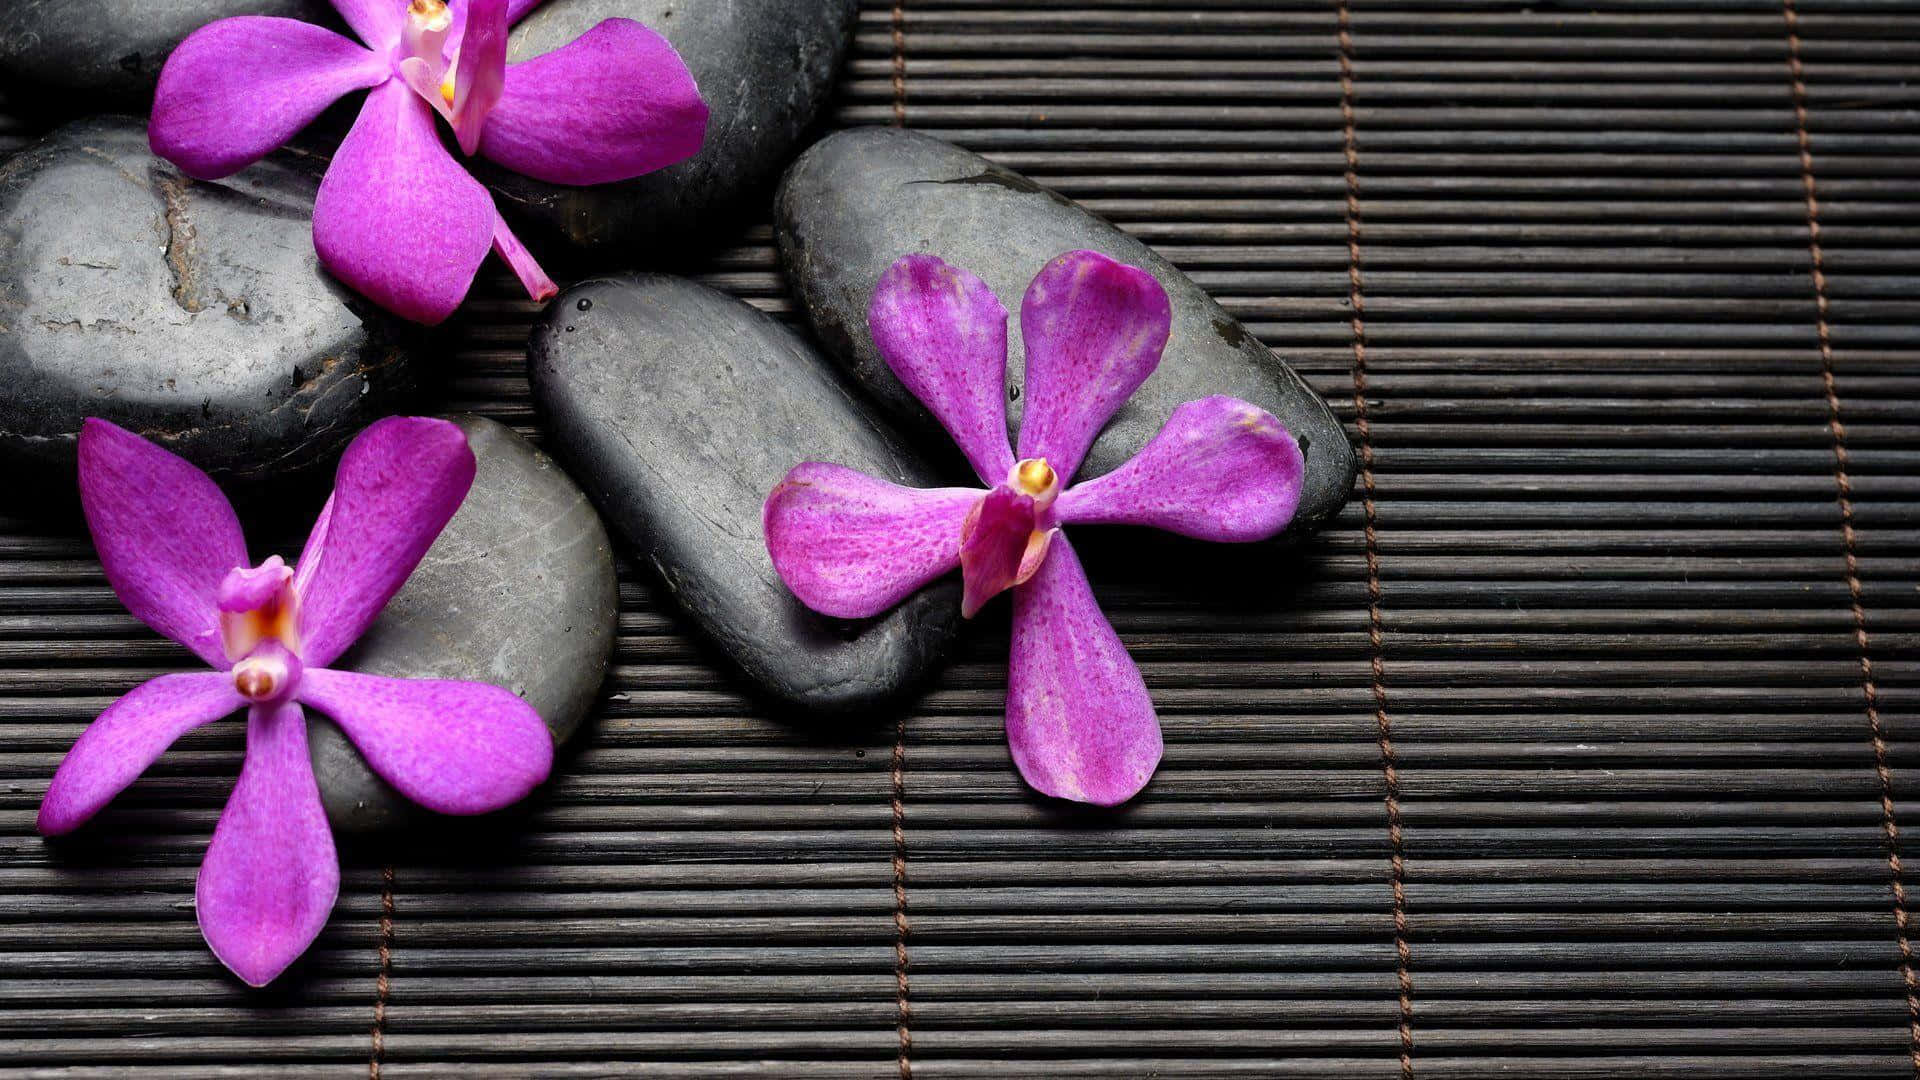 Spa Wellness Orchidsand Stones Wallpaper